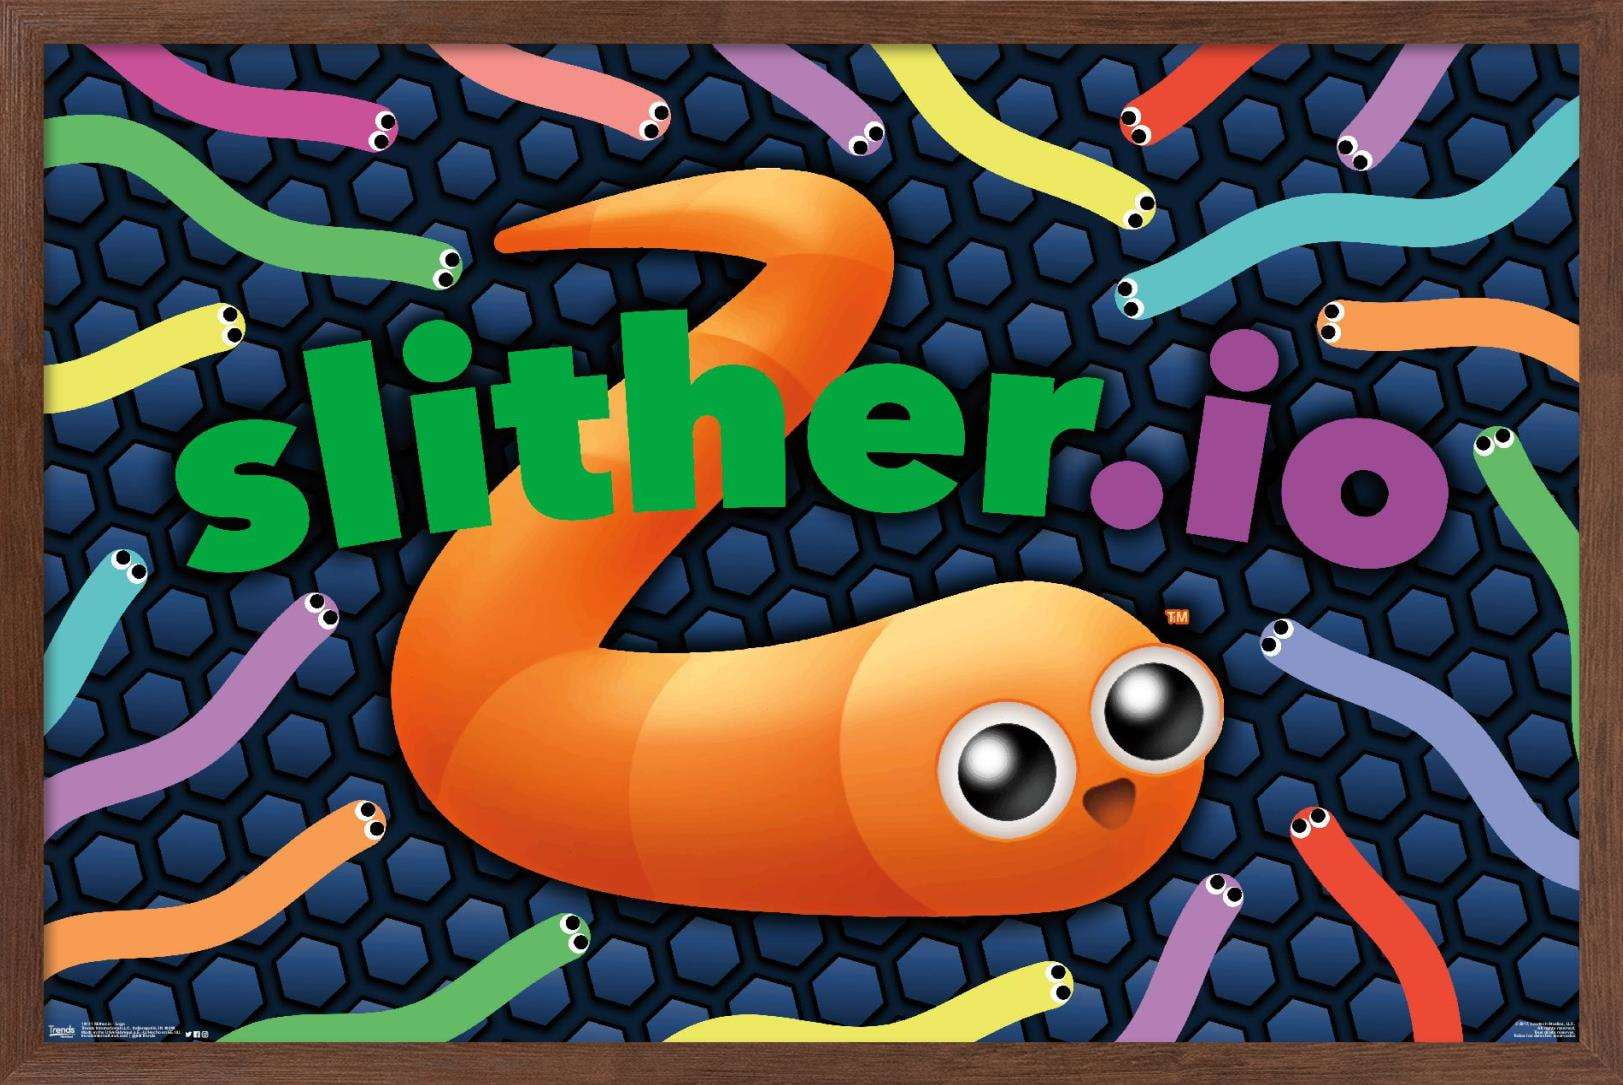 Pixilart - Slither.io logo by MOOVIES